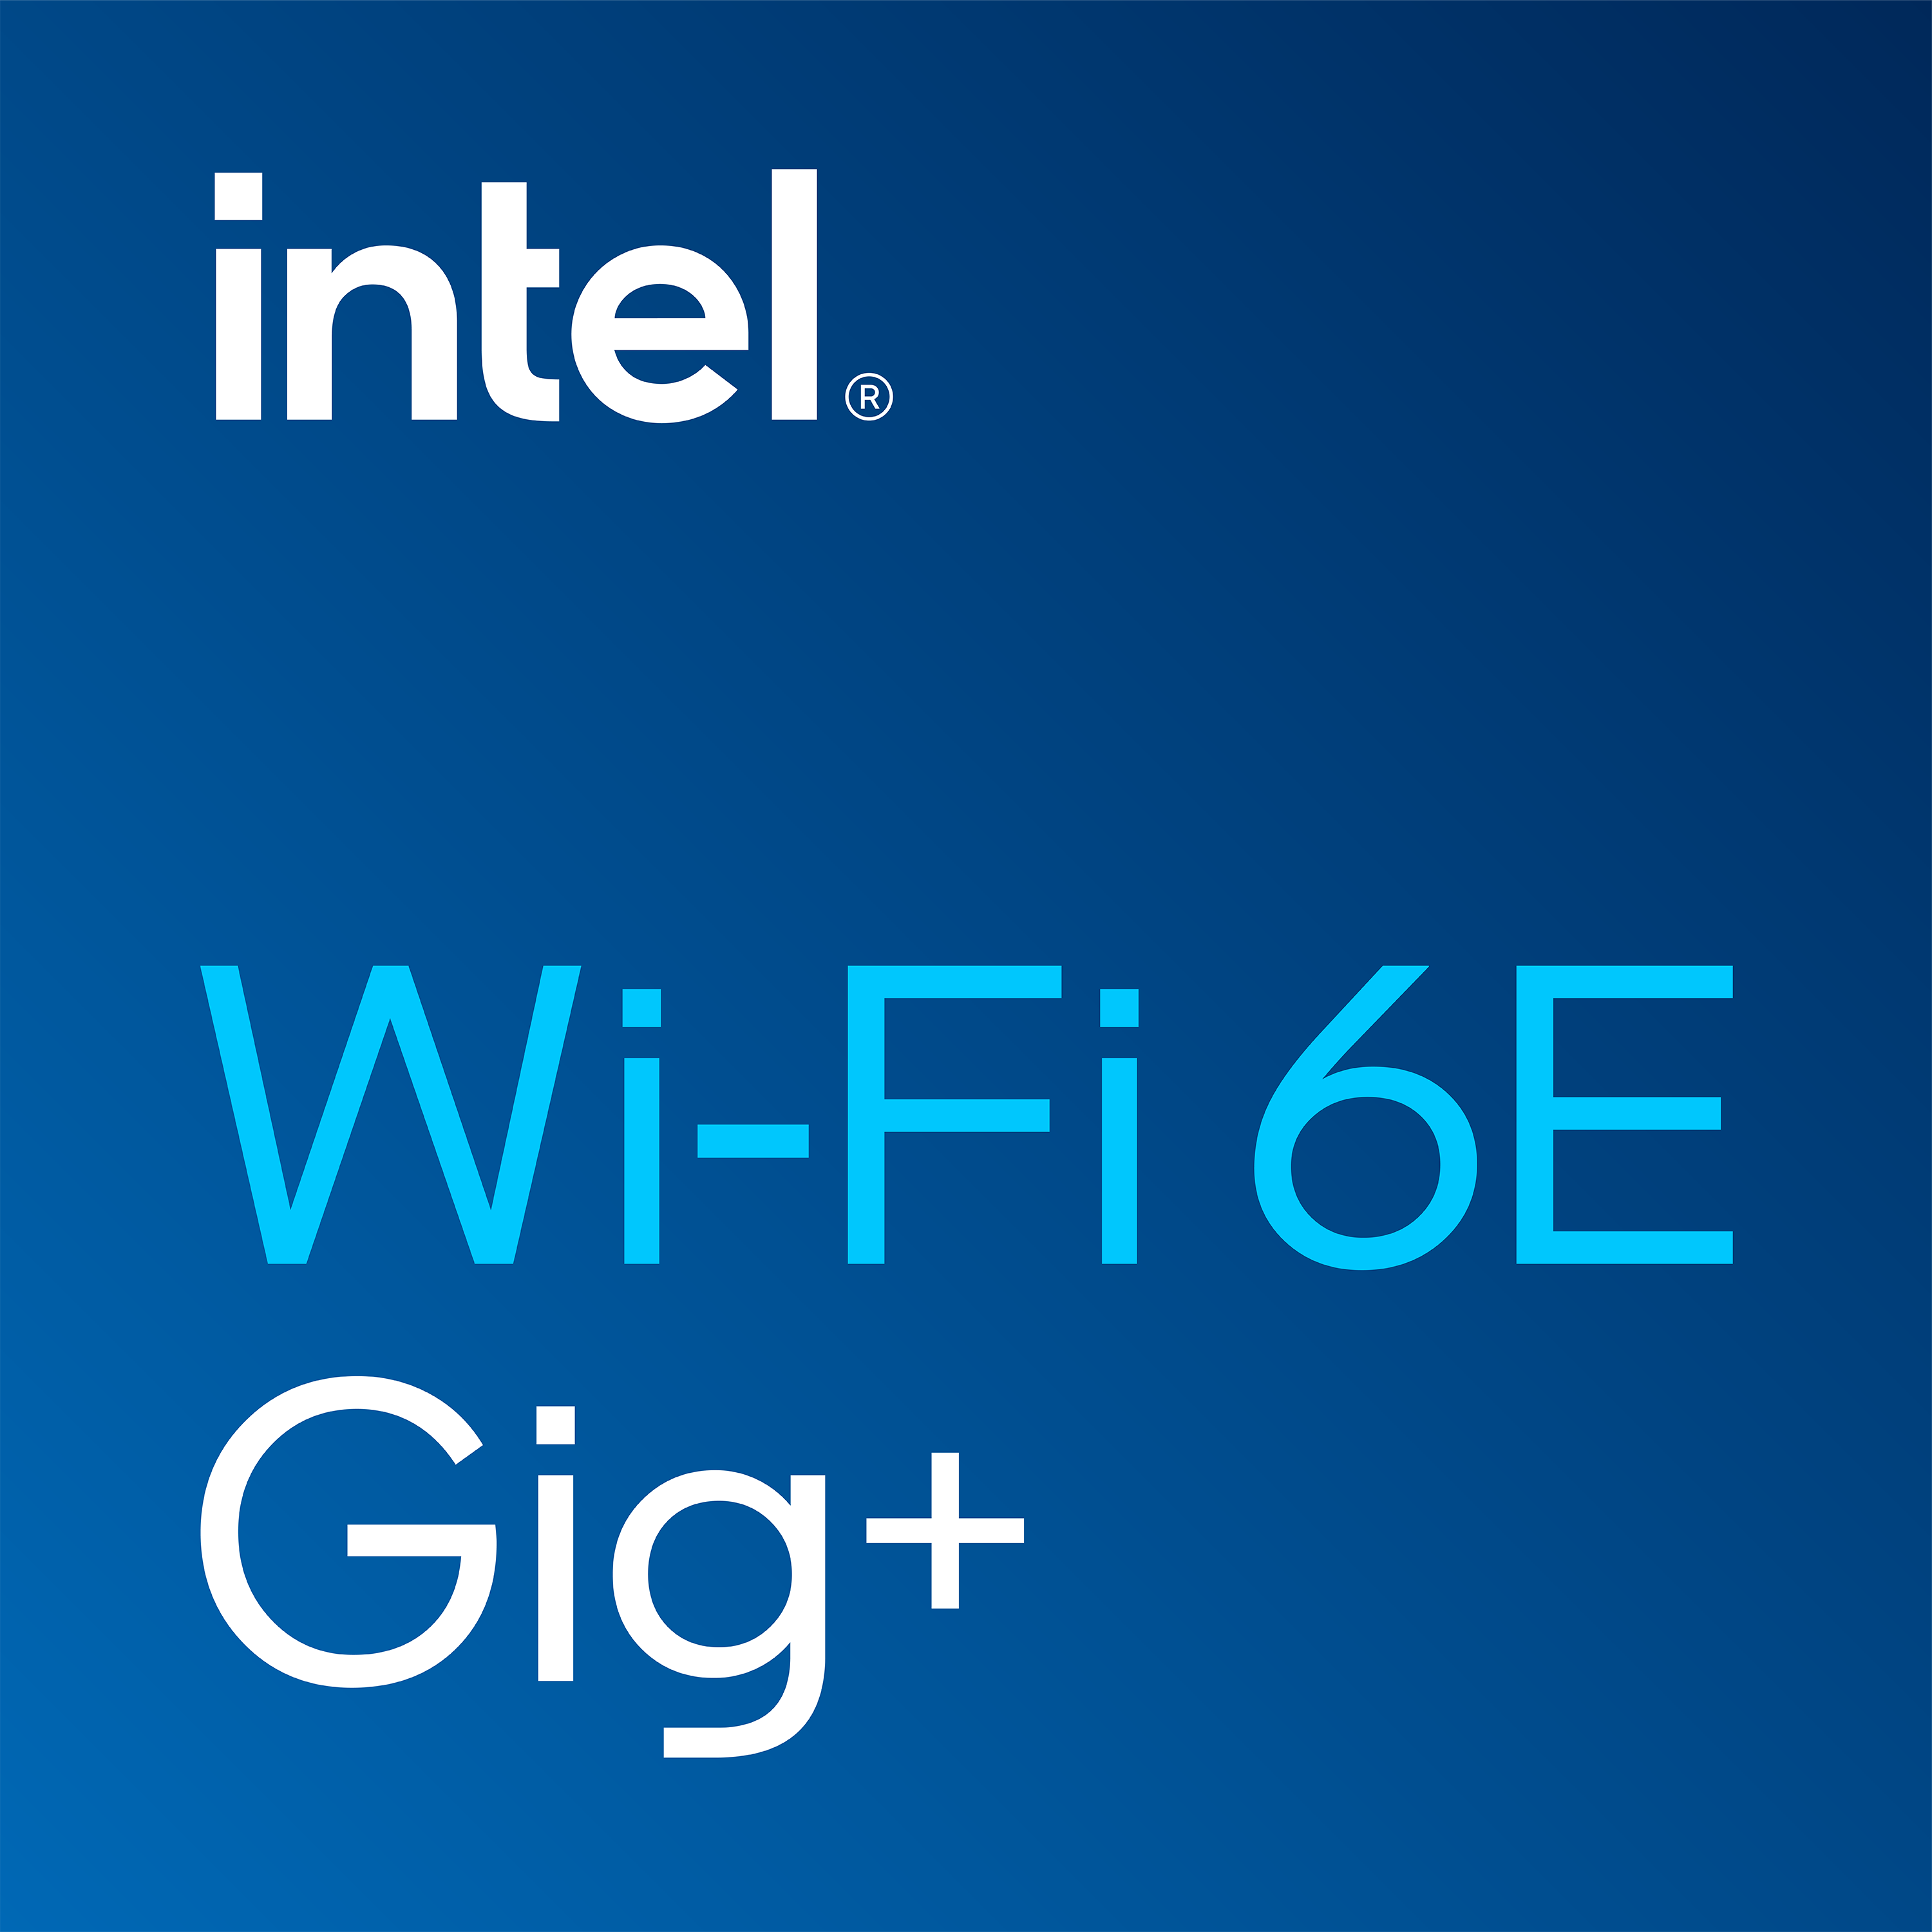 Intel® Wi-Fi 6E AX210 (Gig+) Module Product Brief